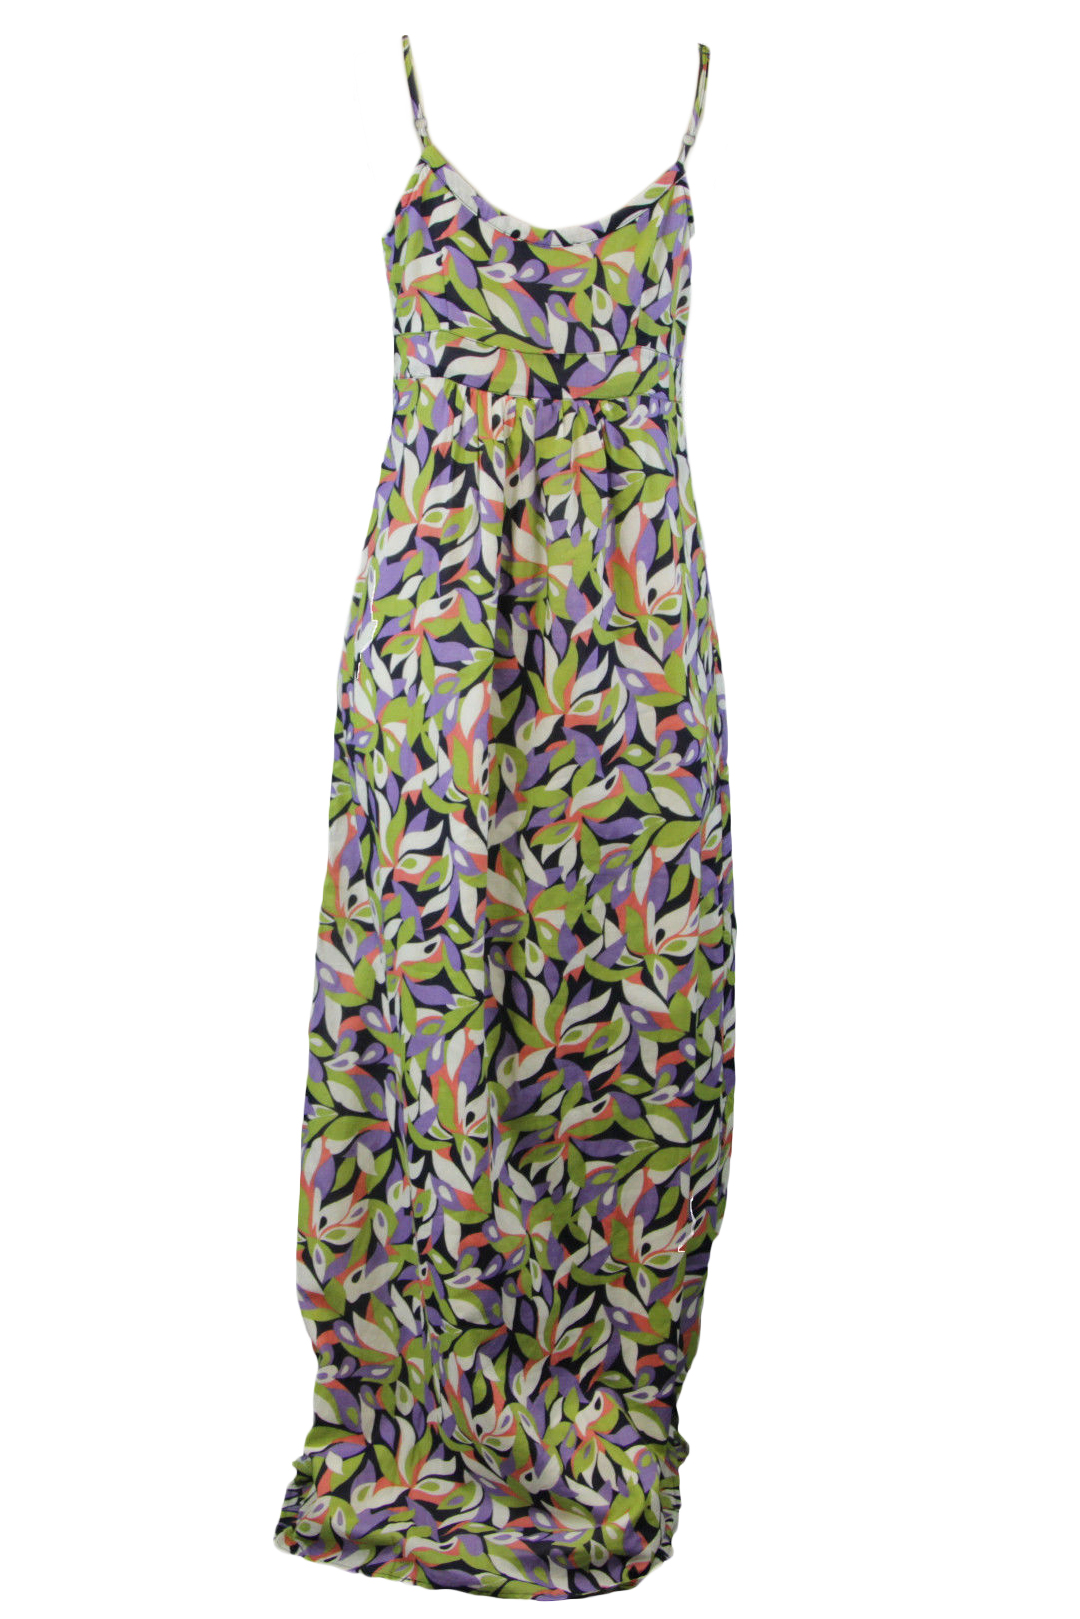 BODEN Women's Printed Maxi Dress WH245 $100 NWOT | eBay